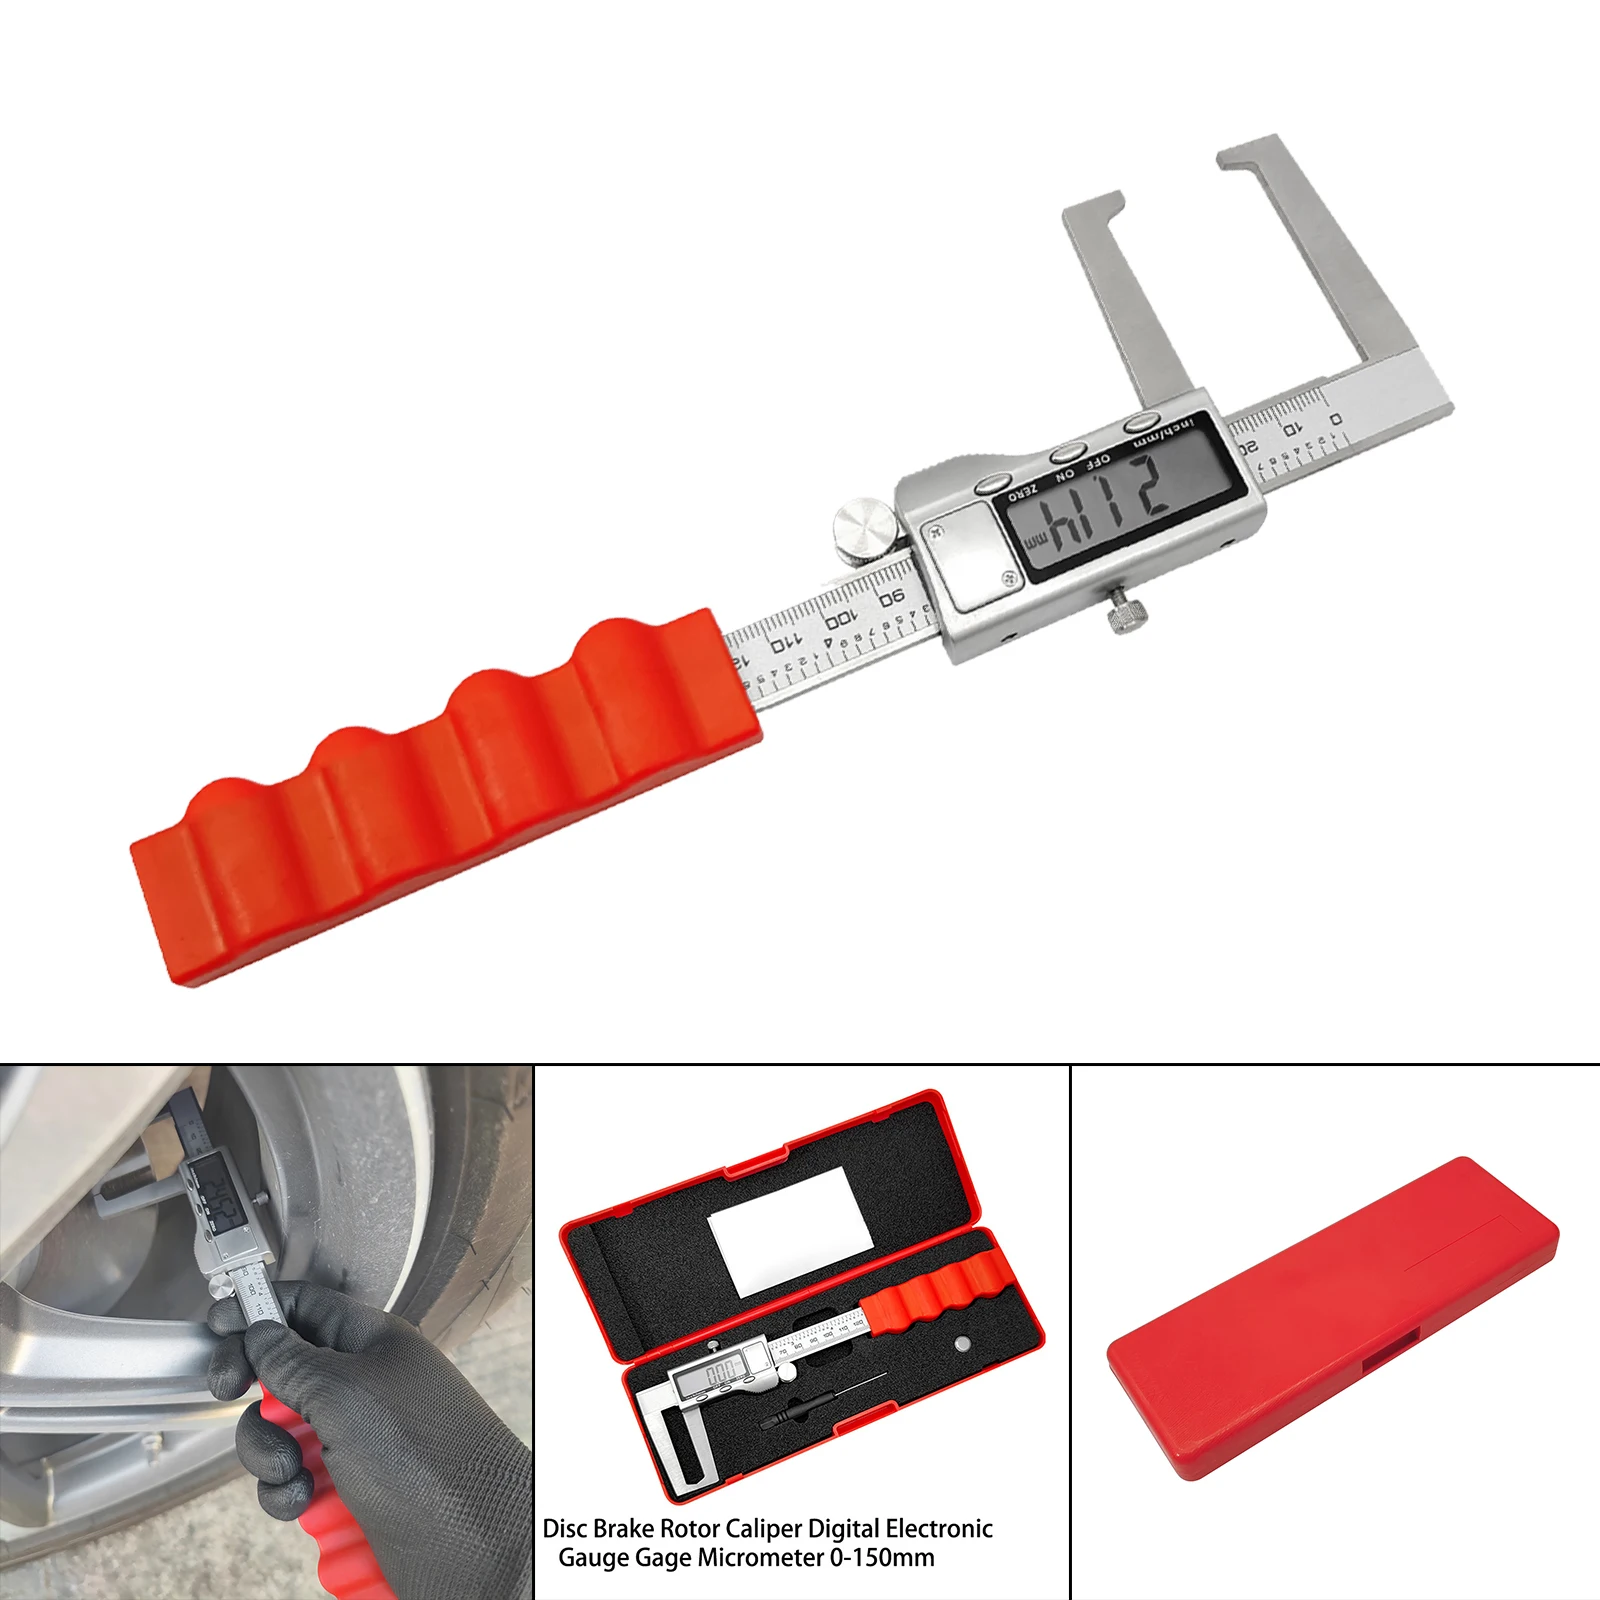 Brake Discs Vernier Caliper Digital Electronic Gauge Gage Detection Tool Micrometer 0-150mm